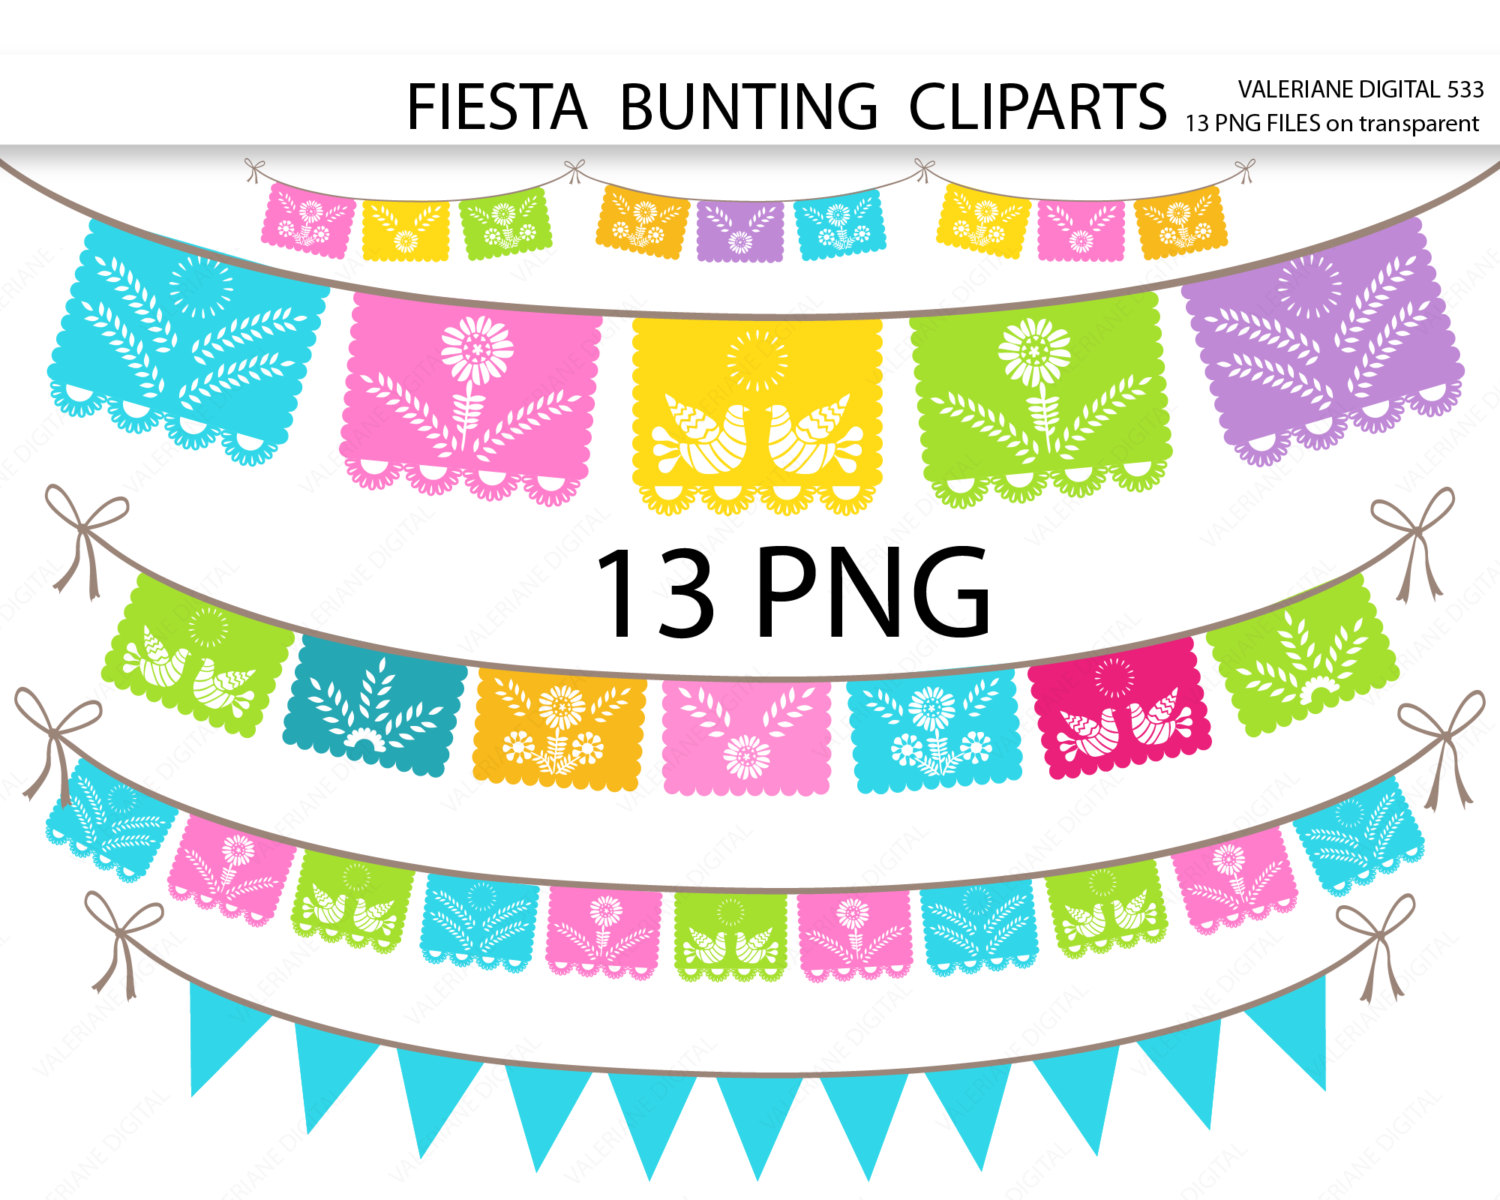 Free Fiesta Borders Cliparts, Download Free Fiesta Borders Cliparts png